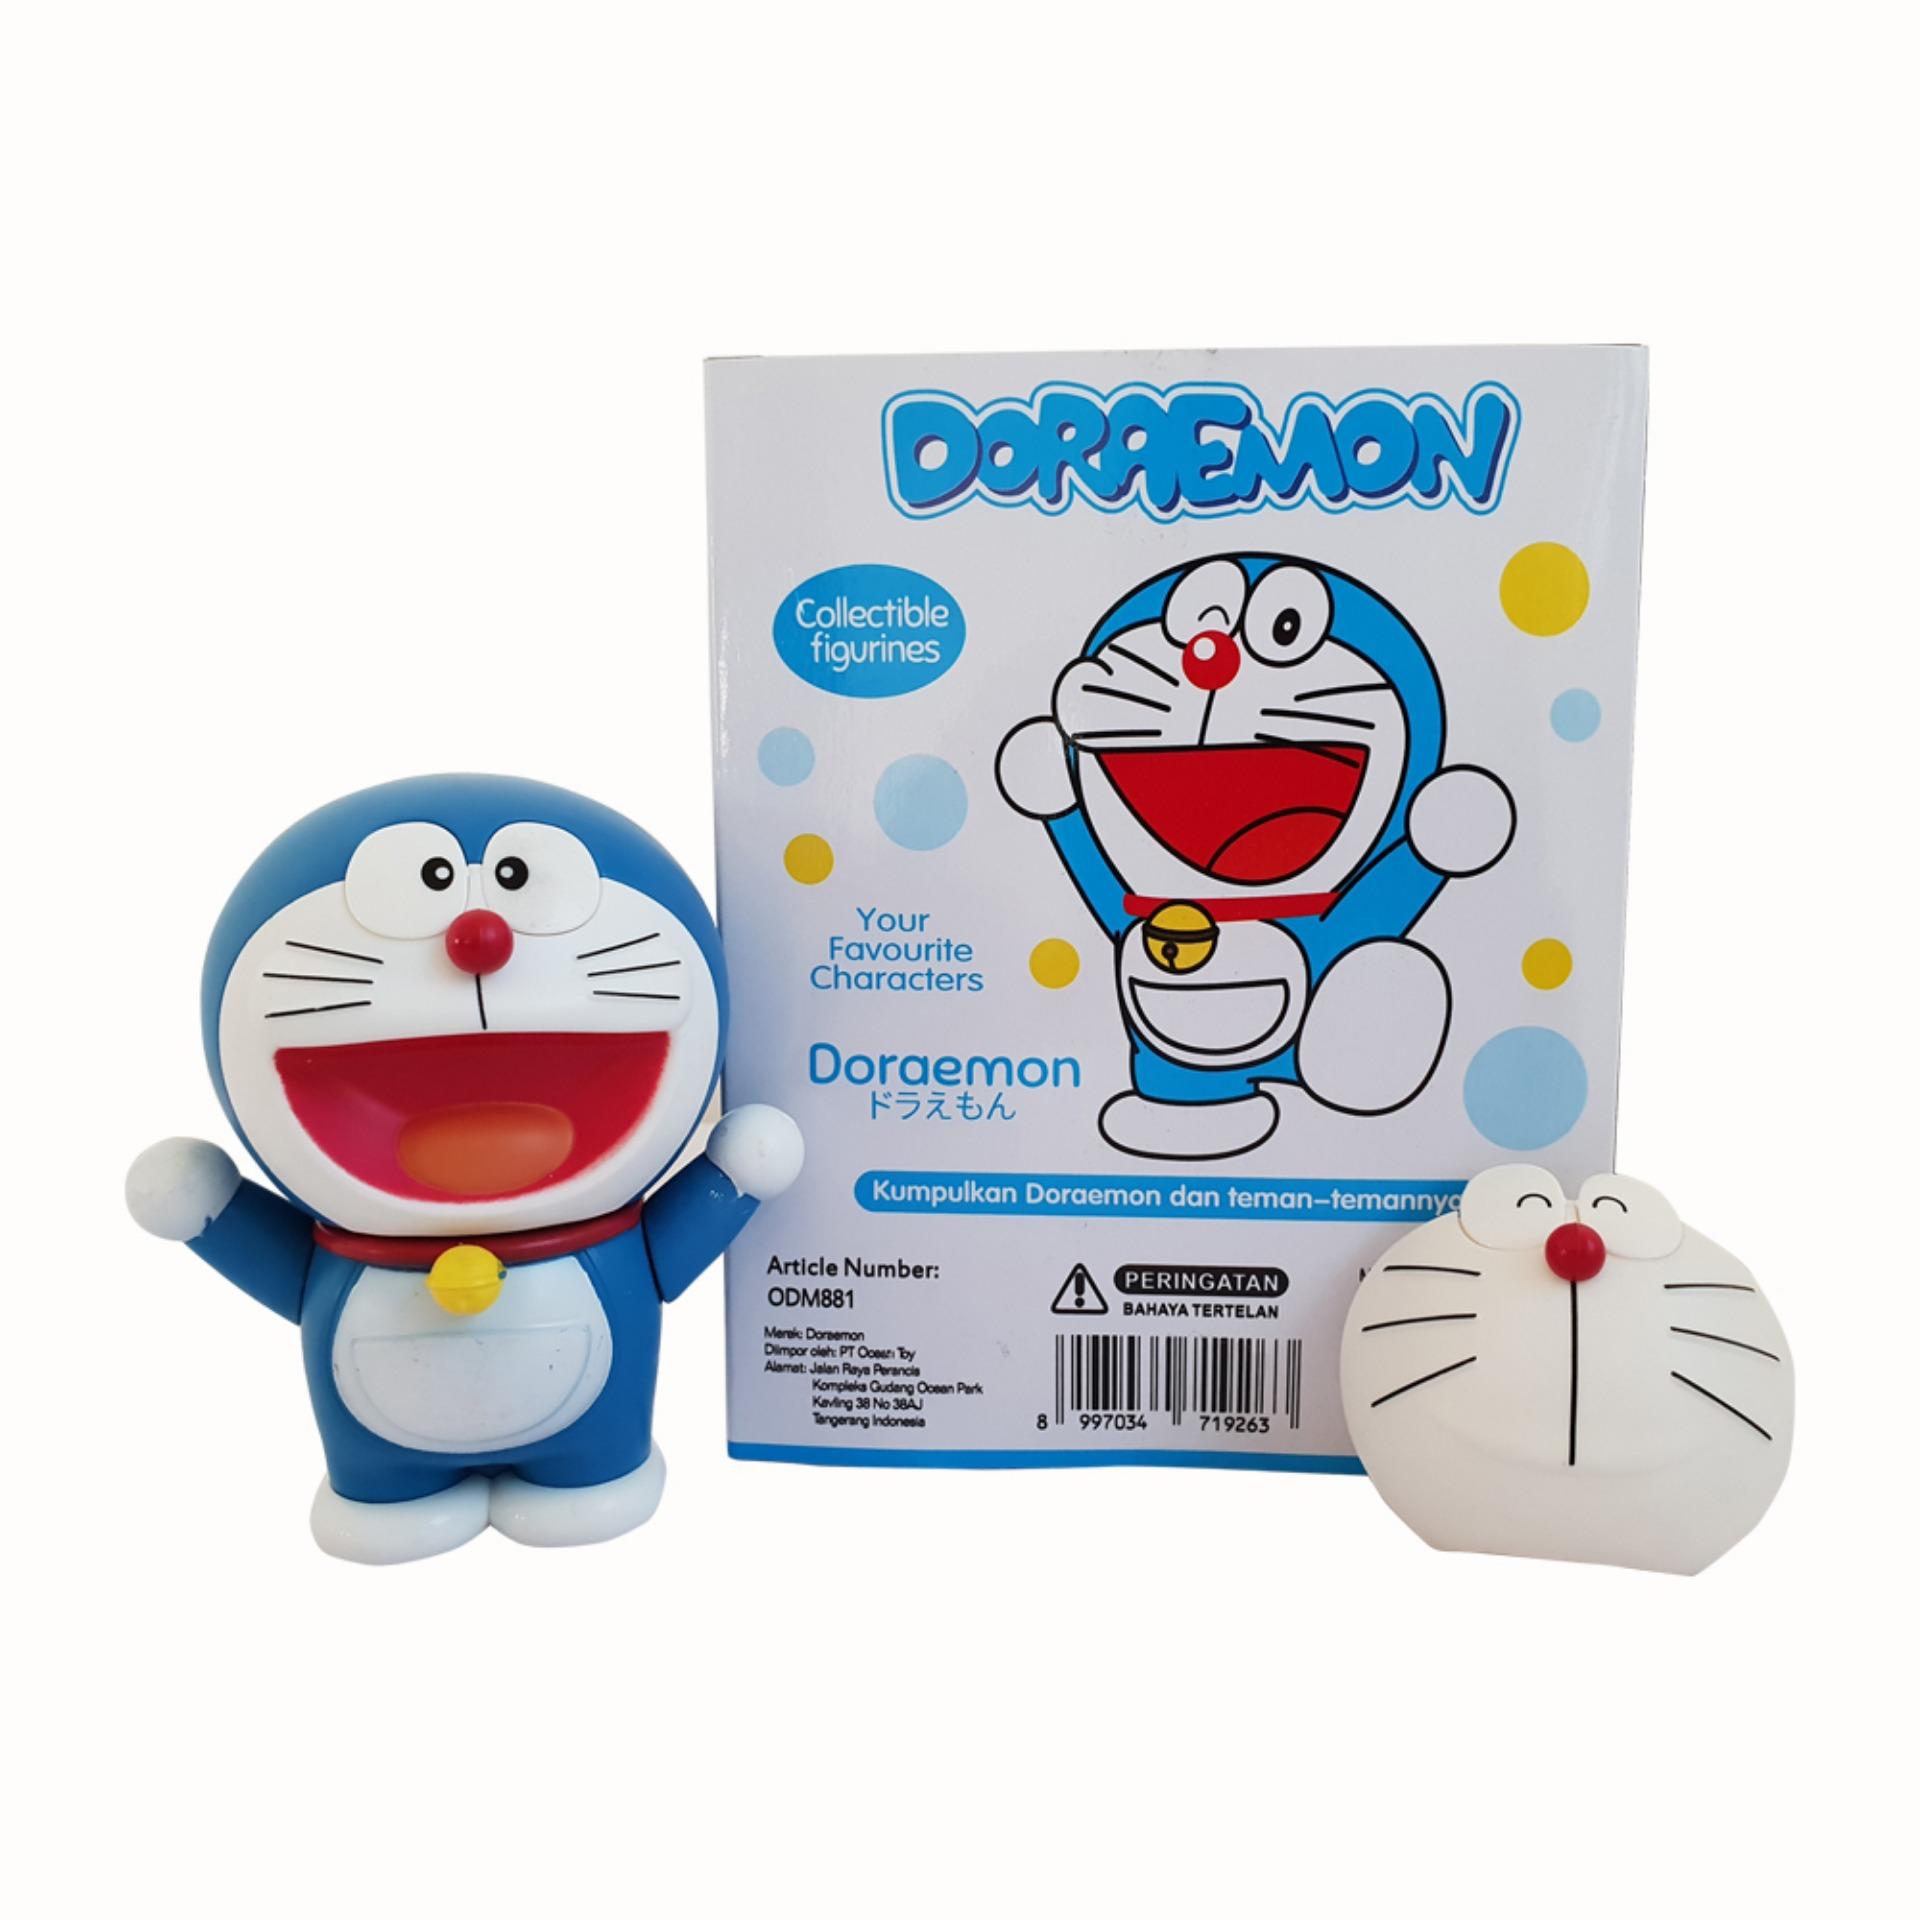 Boneka Doraemon Figurin Mainan Anak Figure Karakter Doraemon Series FS Doraemon Dorami Nobita Shizuka Suneo Giant ODM881 6 Lazada Indonesia